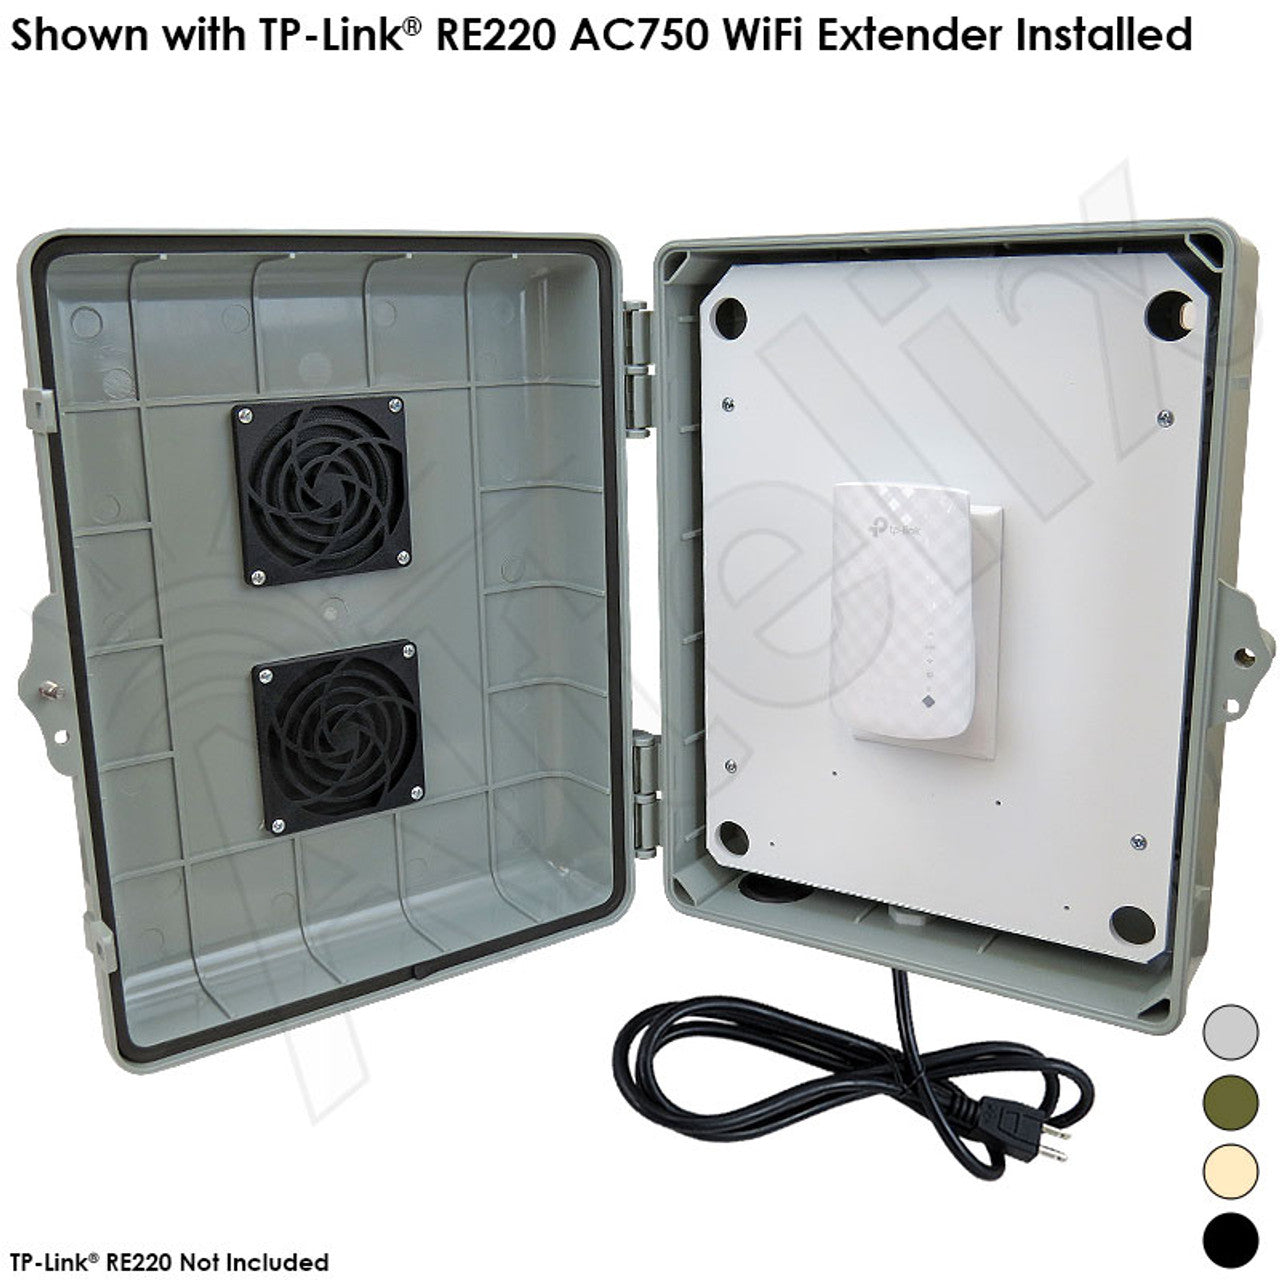 Altelix Weatherproof Vented WiFi Enclosure for TP-Link¬Æ RE220 AC750 WiFi Extender